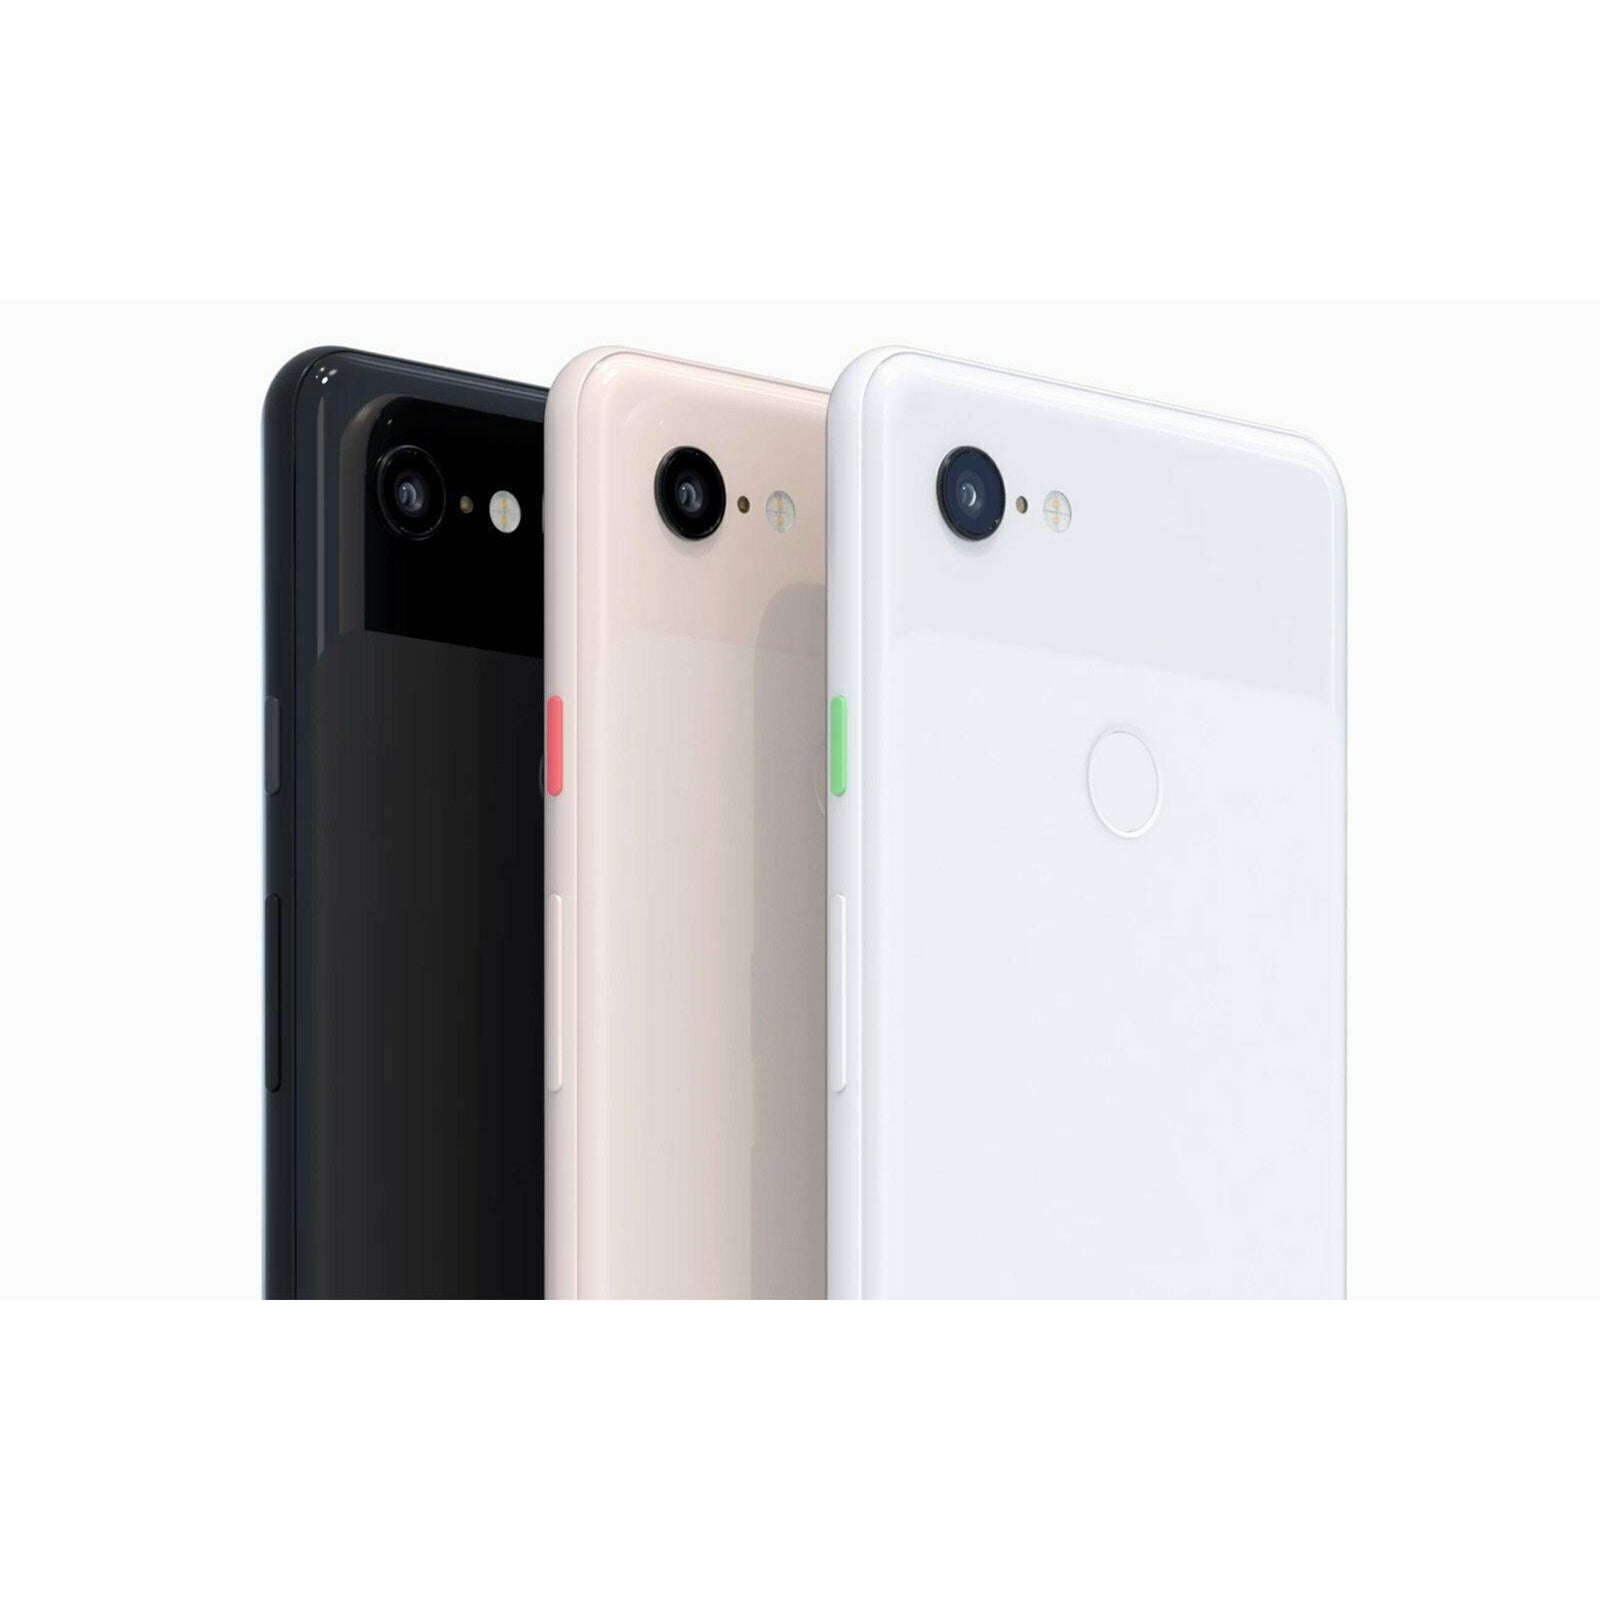 Google Pixel 3XL Unlocked Smartphone - 64GB, 128GB in White, Black, Pink